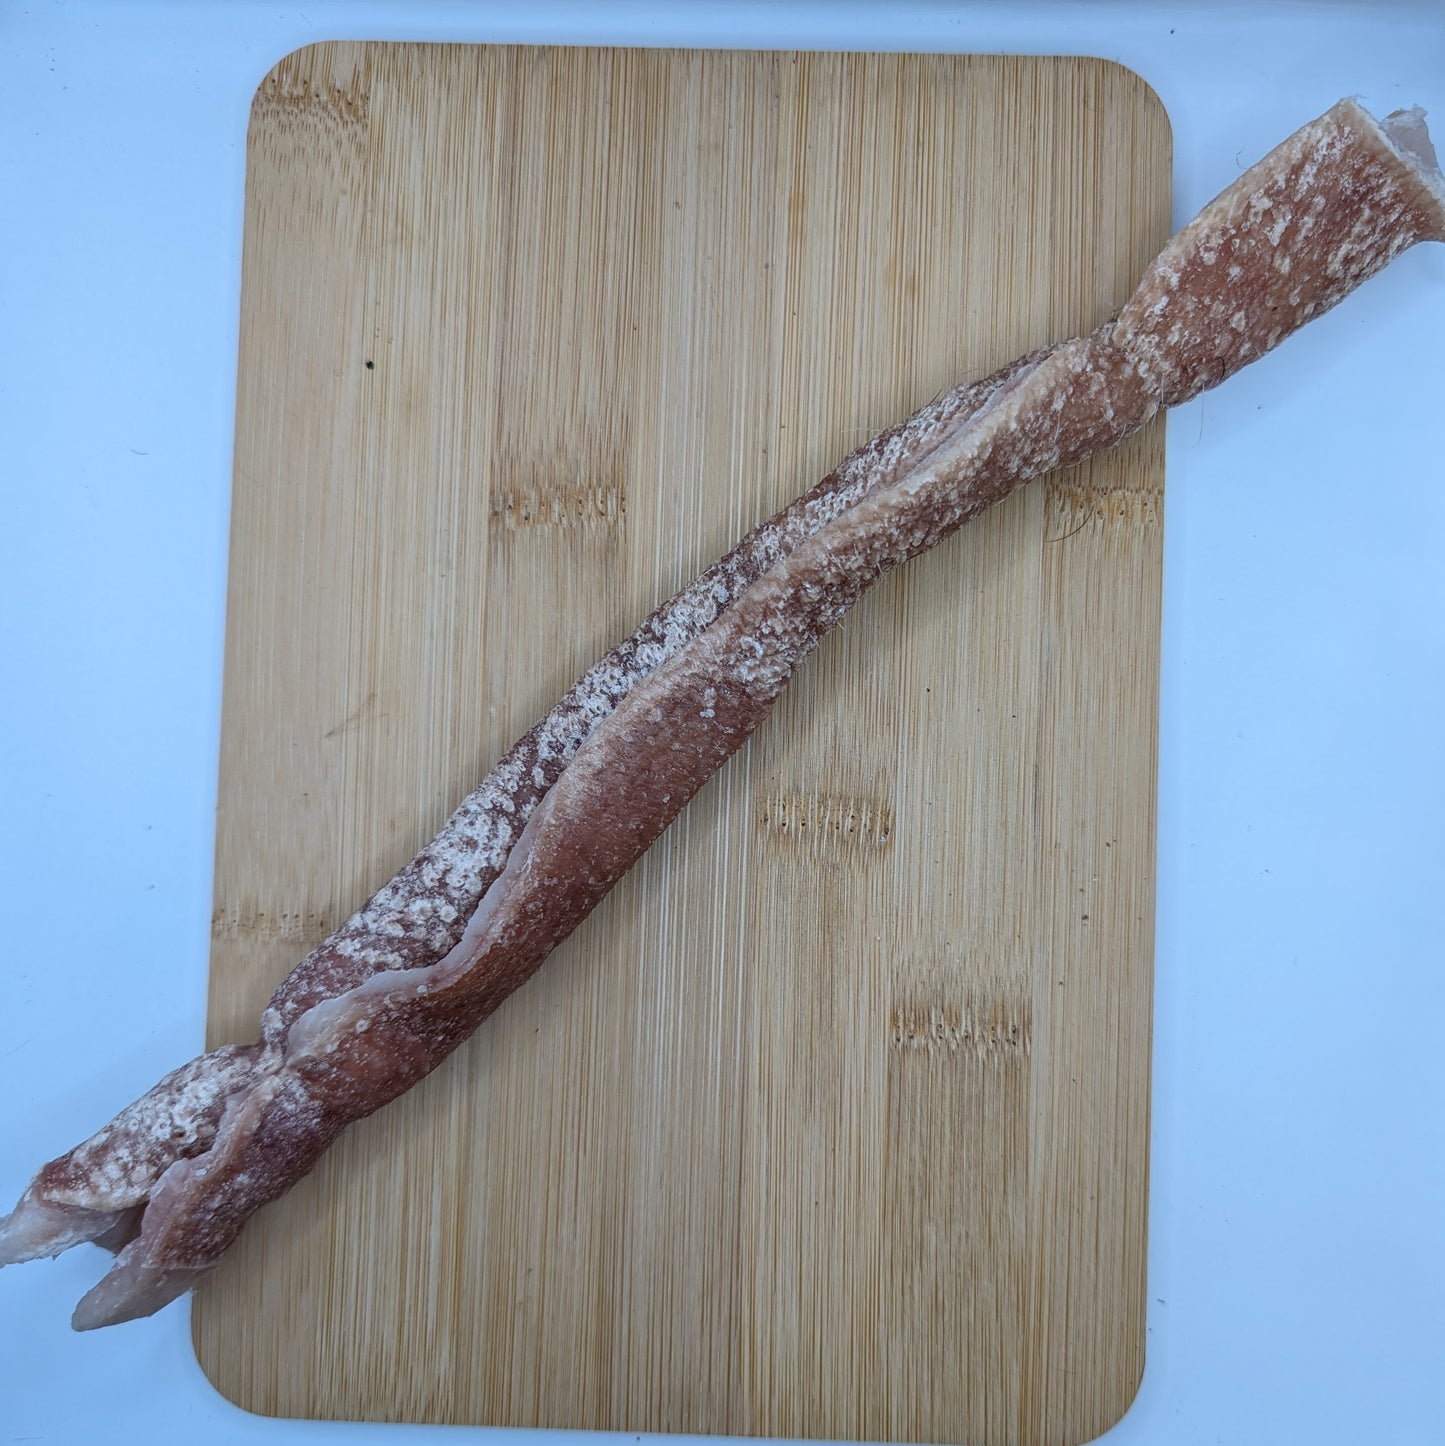 A Beast Feast heritage breed freeze-dried pork roll sits on a cutting board.